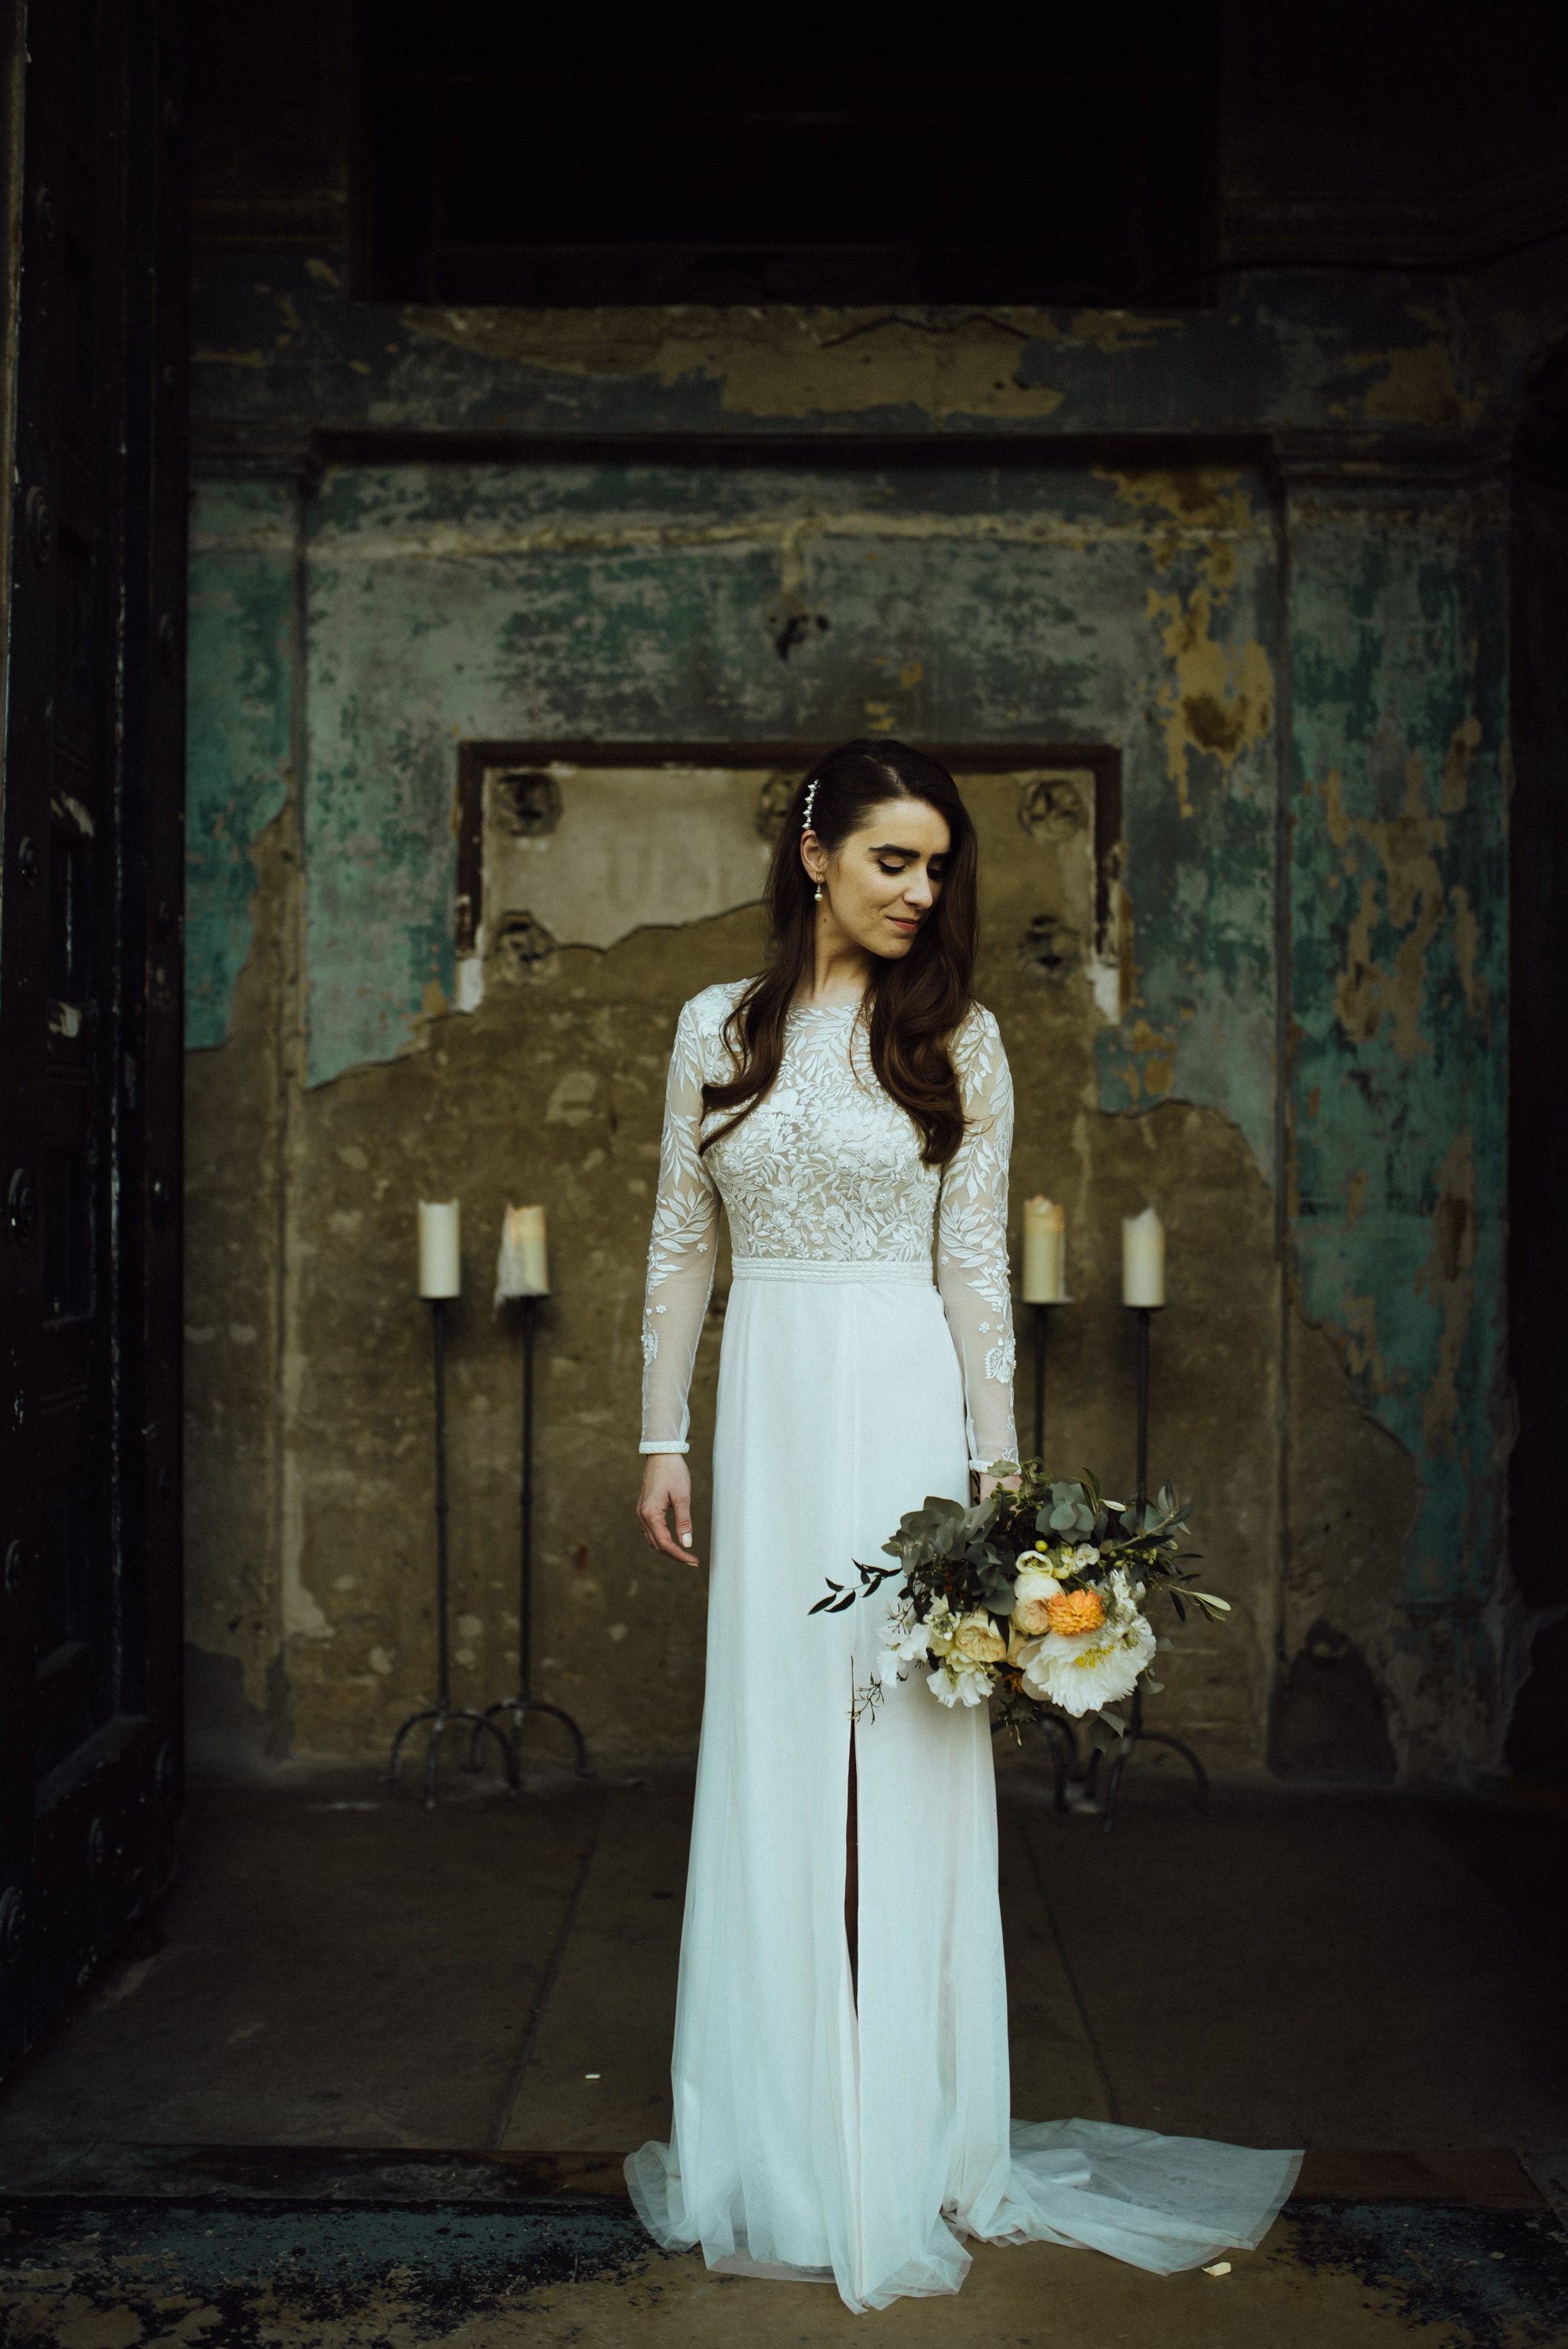 Hermione De Paula wedding dress, edgy wedding photographer, london wedding photography, artistic wedding photography